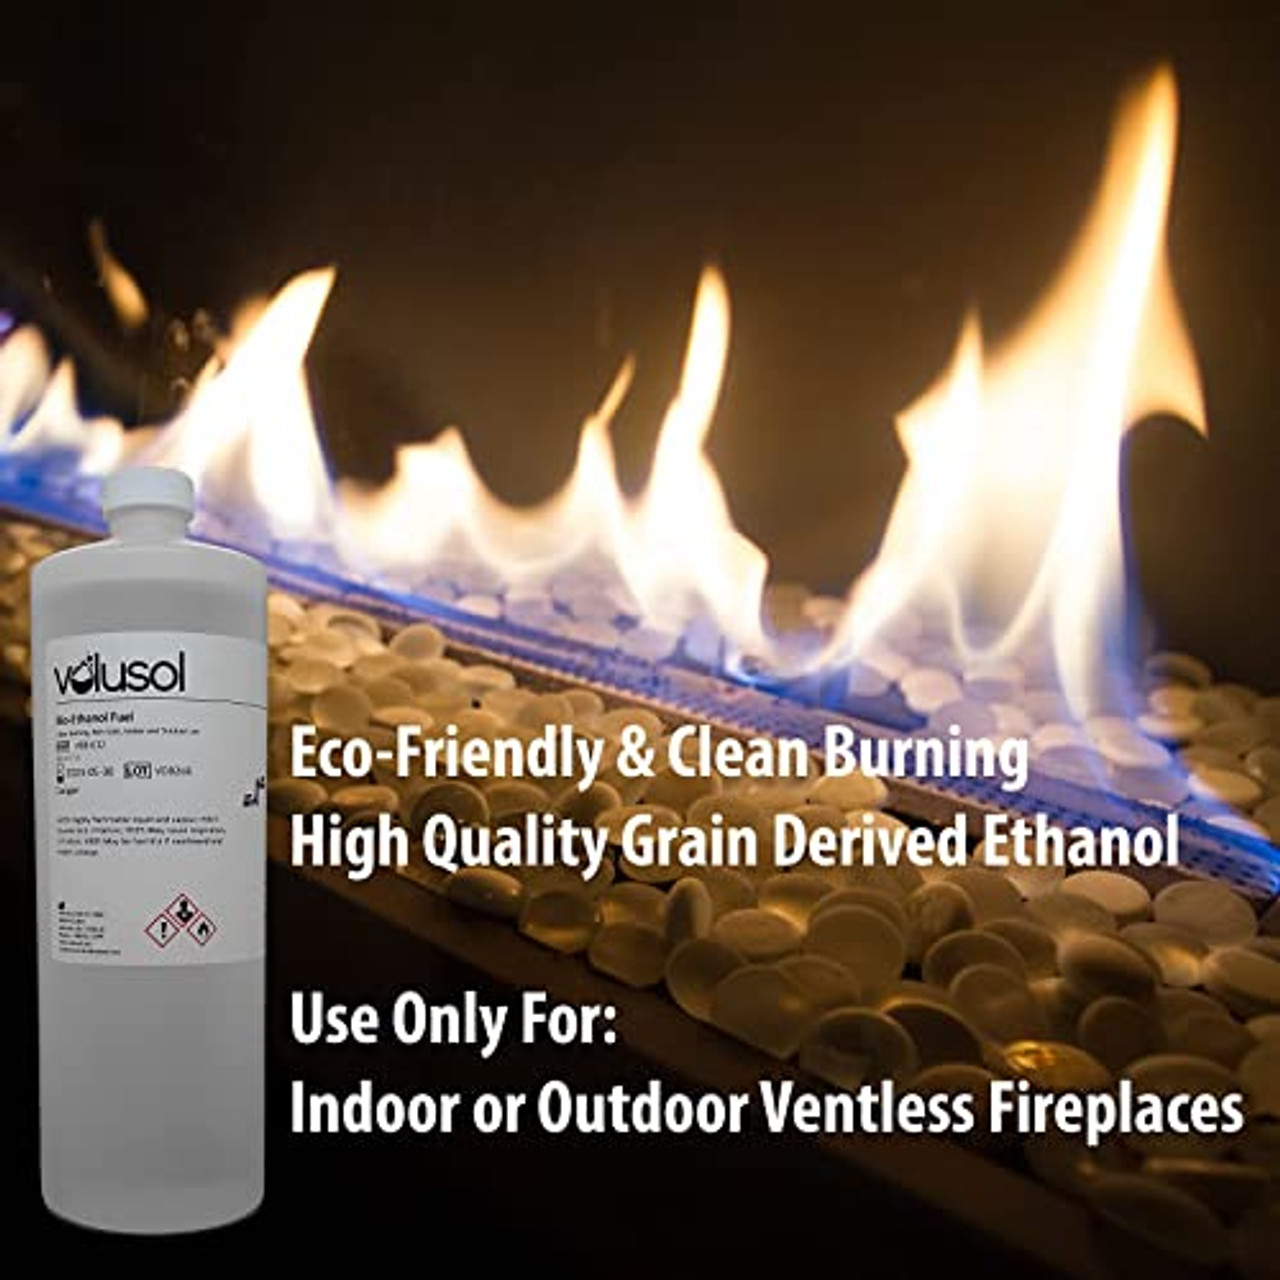 Volu Sol Fireplace Fuel, Ventless, Bio-Ethanol, Clean Burning/Eco-Friendly  (1000mL /32 oz.) (Pack of 3)